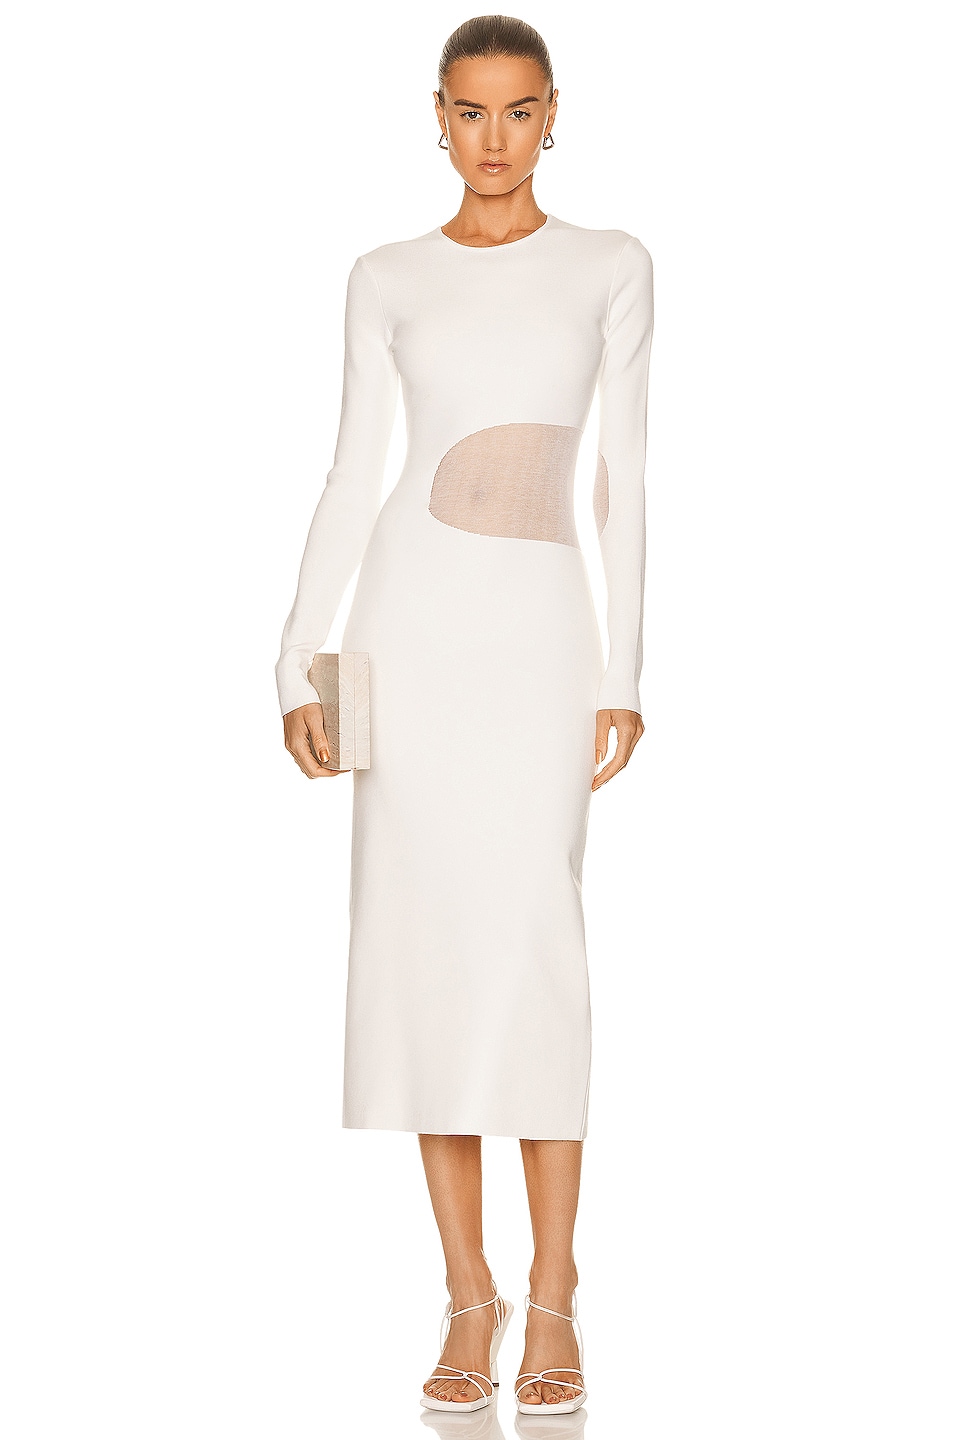 Zeynep Arcay Sheer Knit Midi Dress in White | FWRD